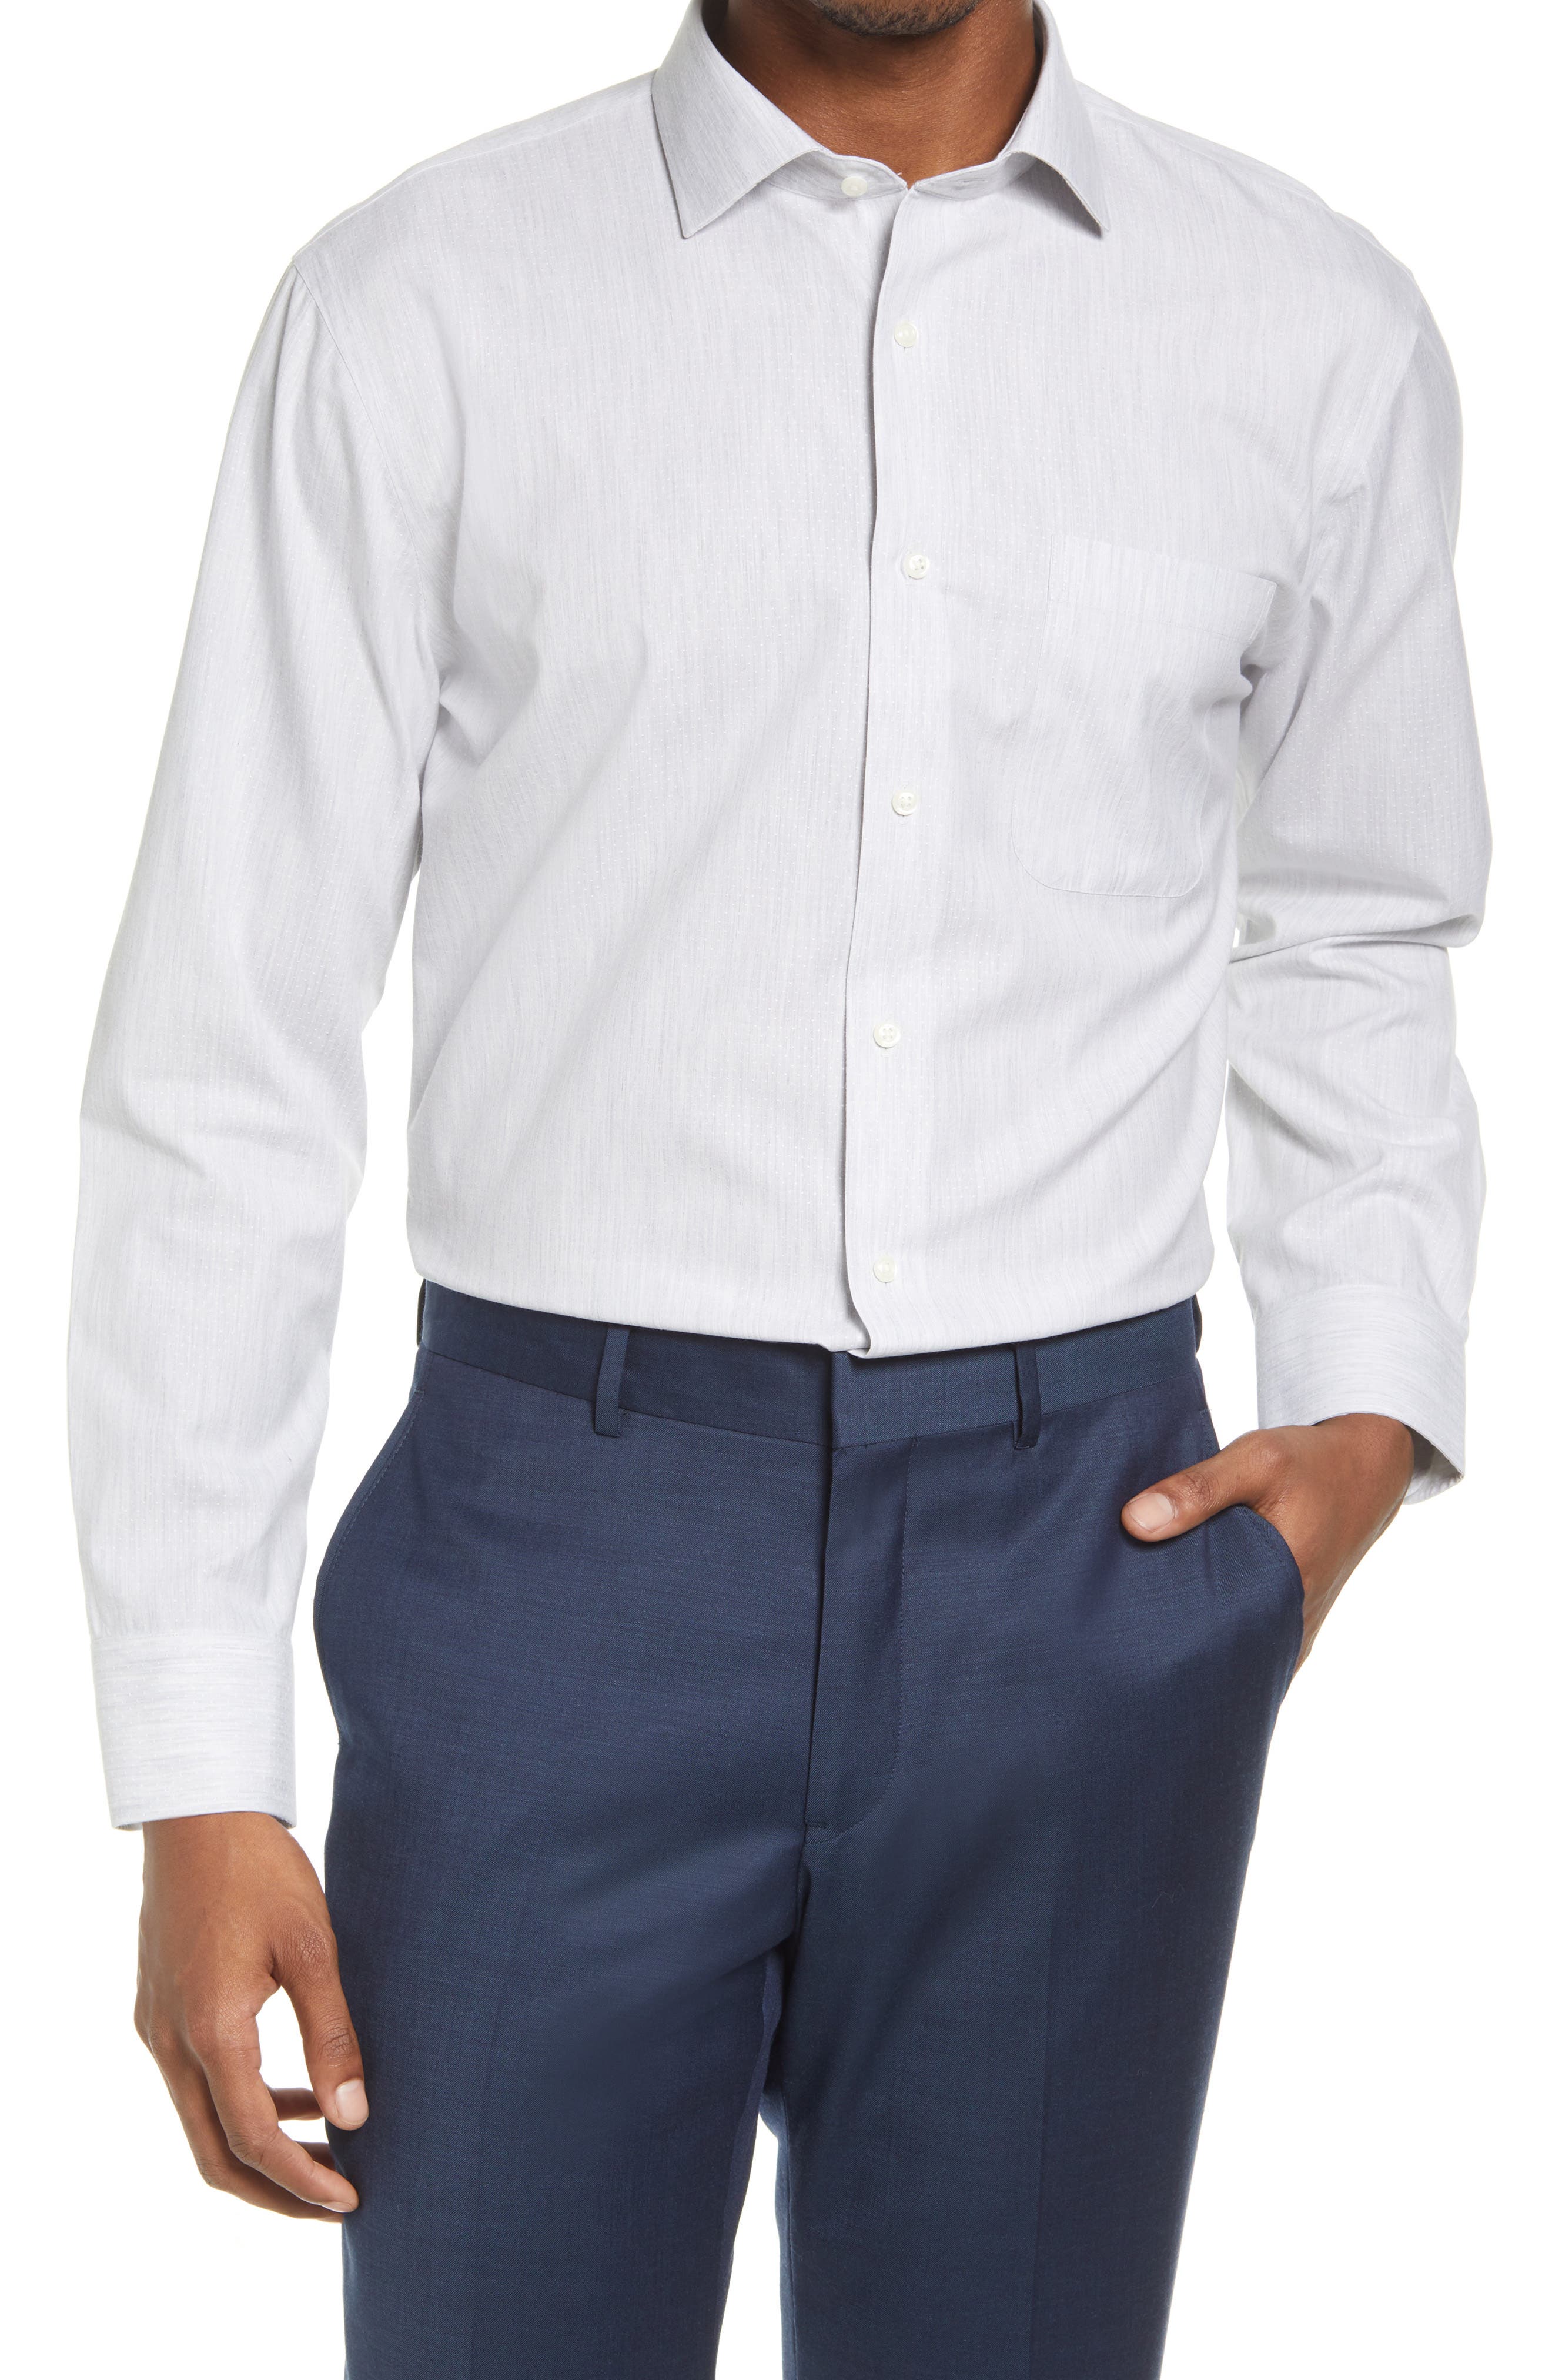 SportsX Men Thin Long-Sleeve Juniors Non-Iron Fit Business Dress Shirts 